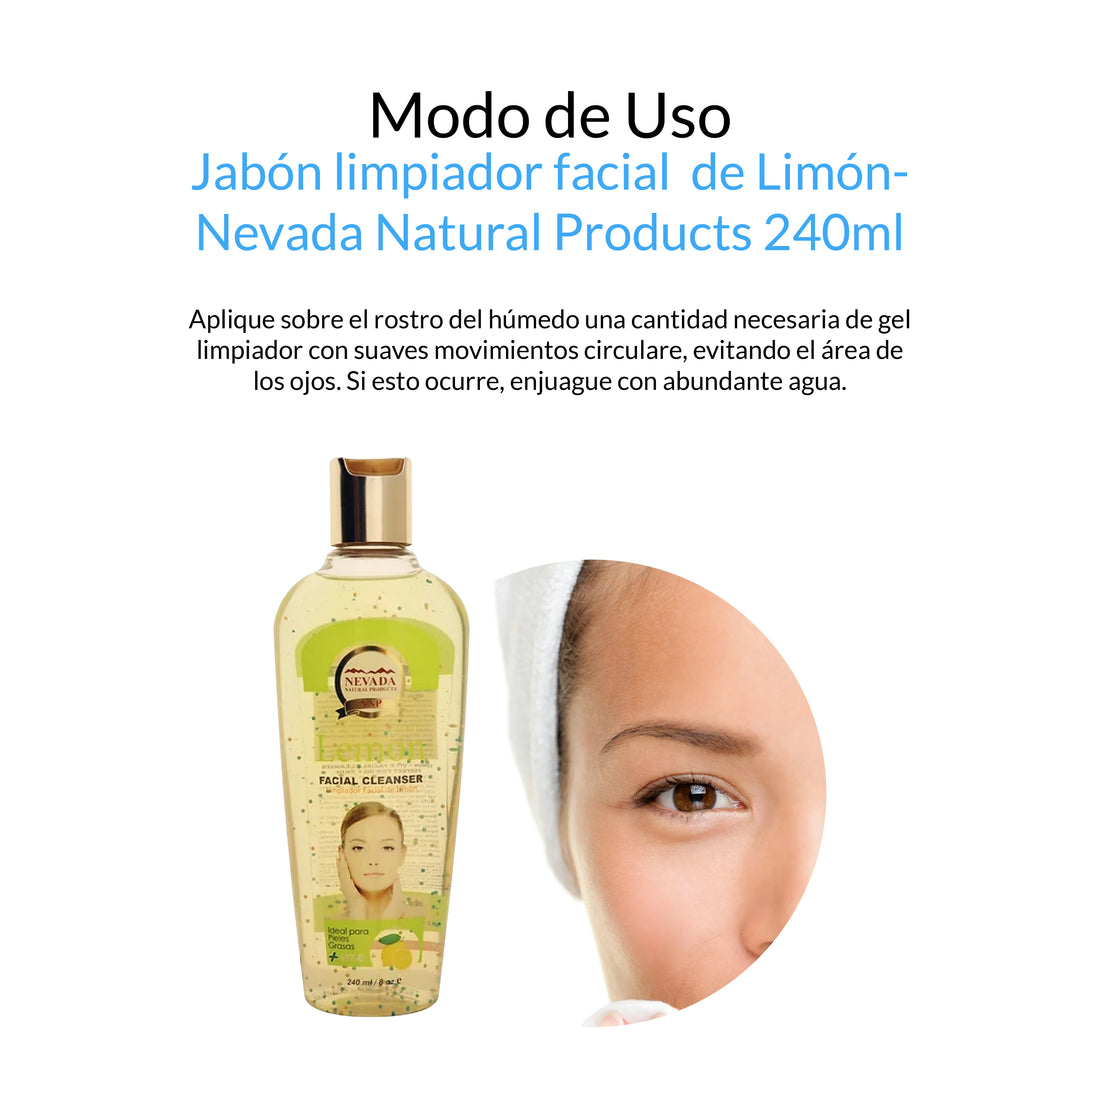 Jabón limpiador Facial de Limón - Nevada Natural Products 240ml